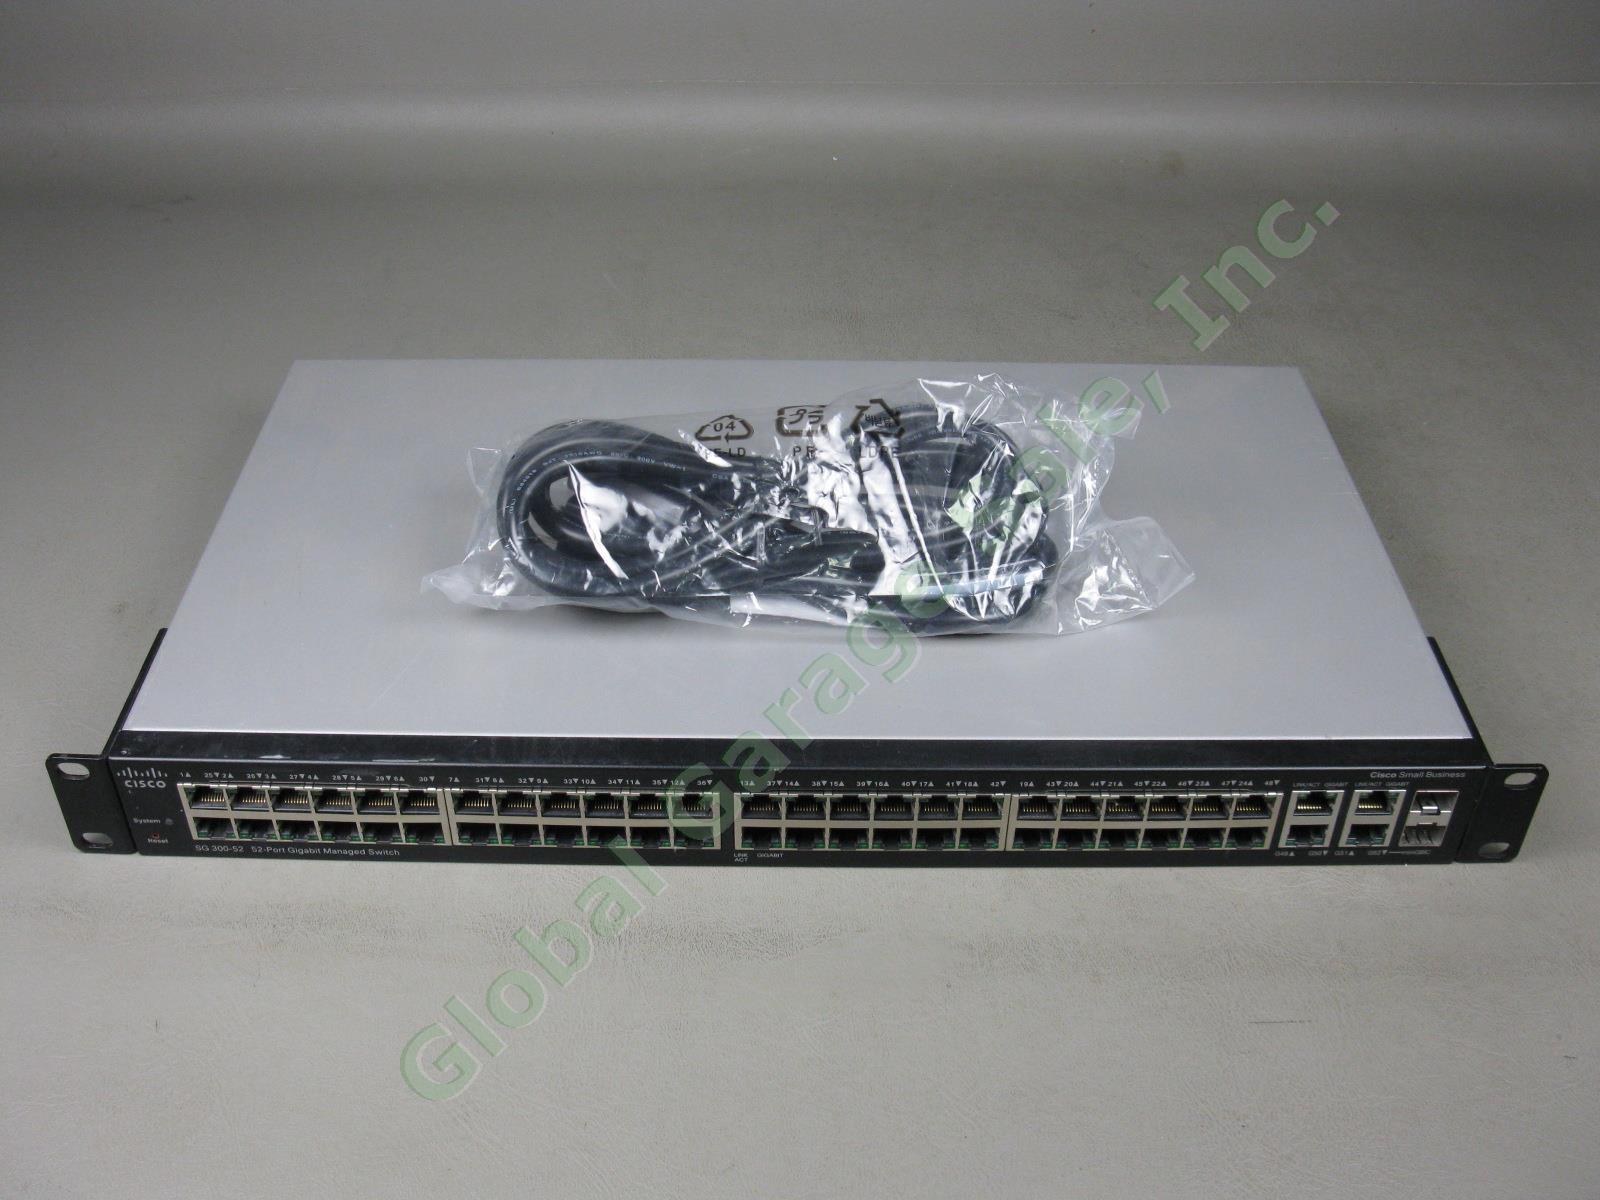 Cisco Small Business SG300-52 Port Gigabit Managed Ethernet Switch SRW2048-K9VO1